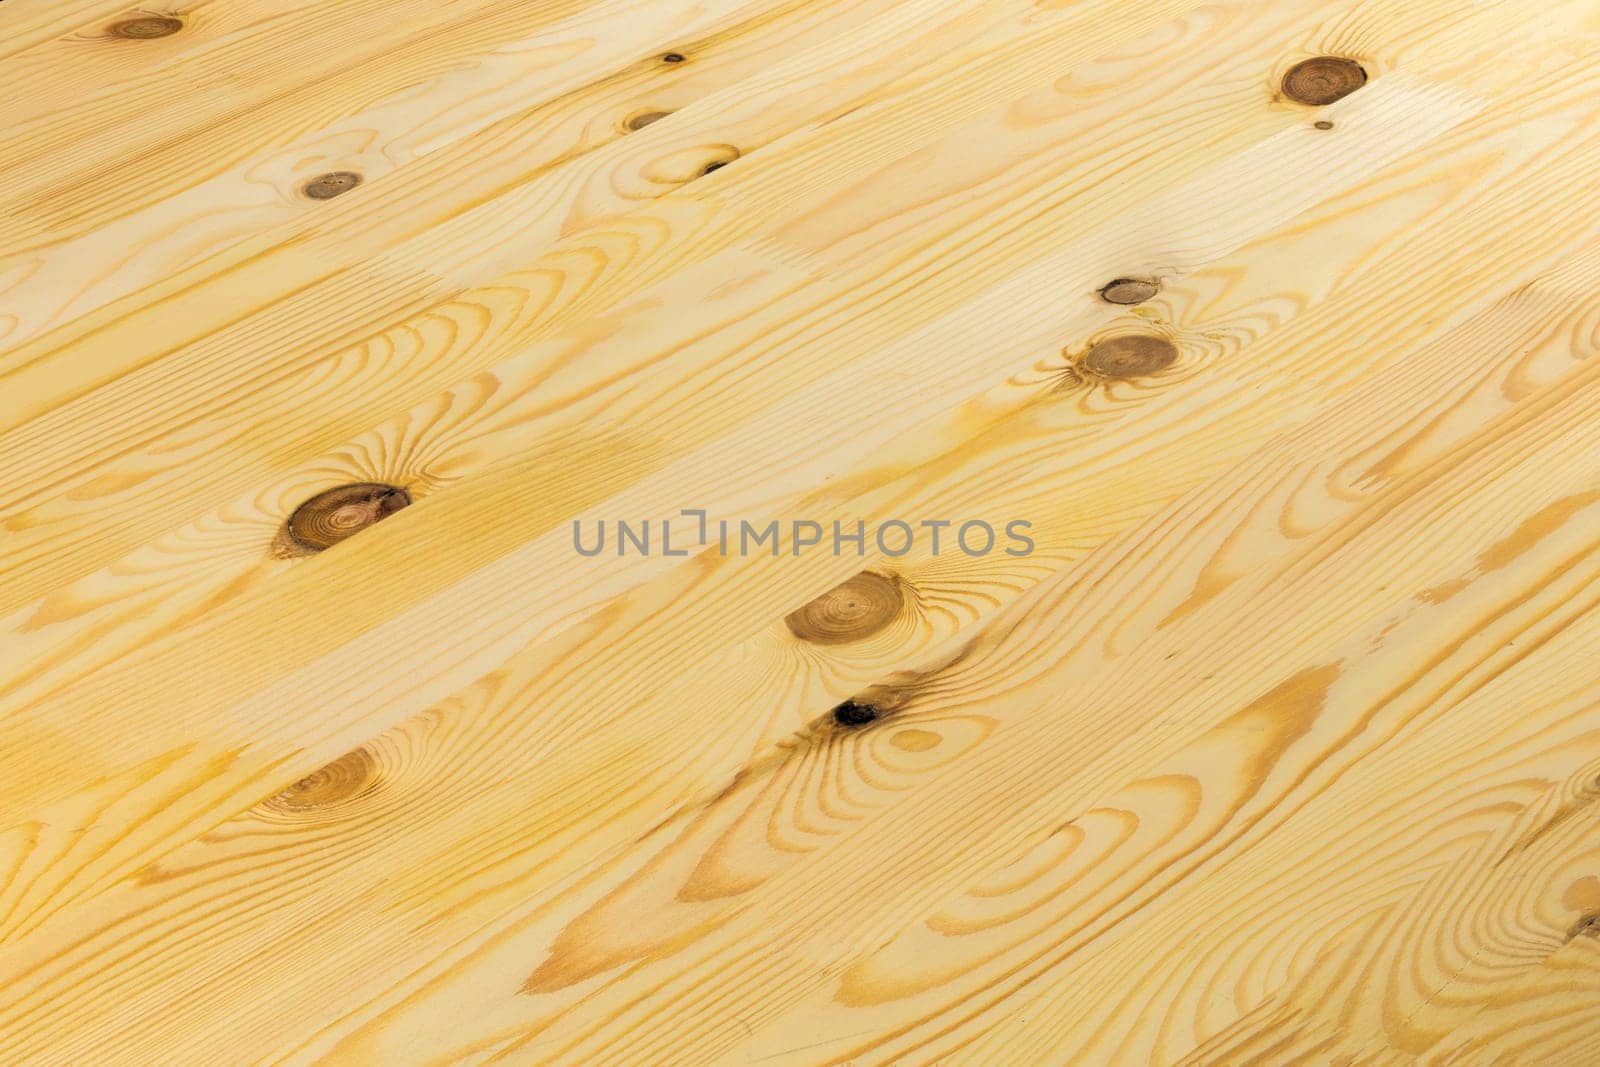 hardwood flooring plank solid glued board, full-frame background with diagonal composition.